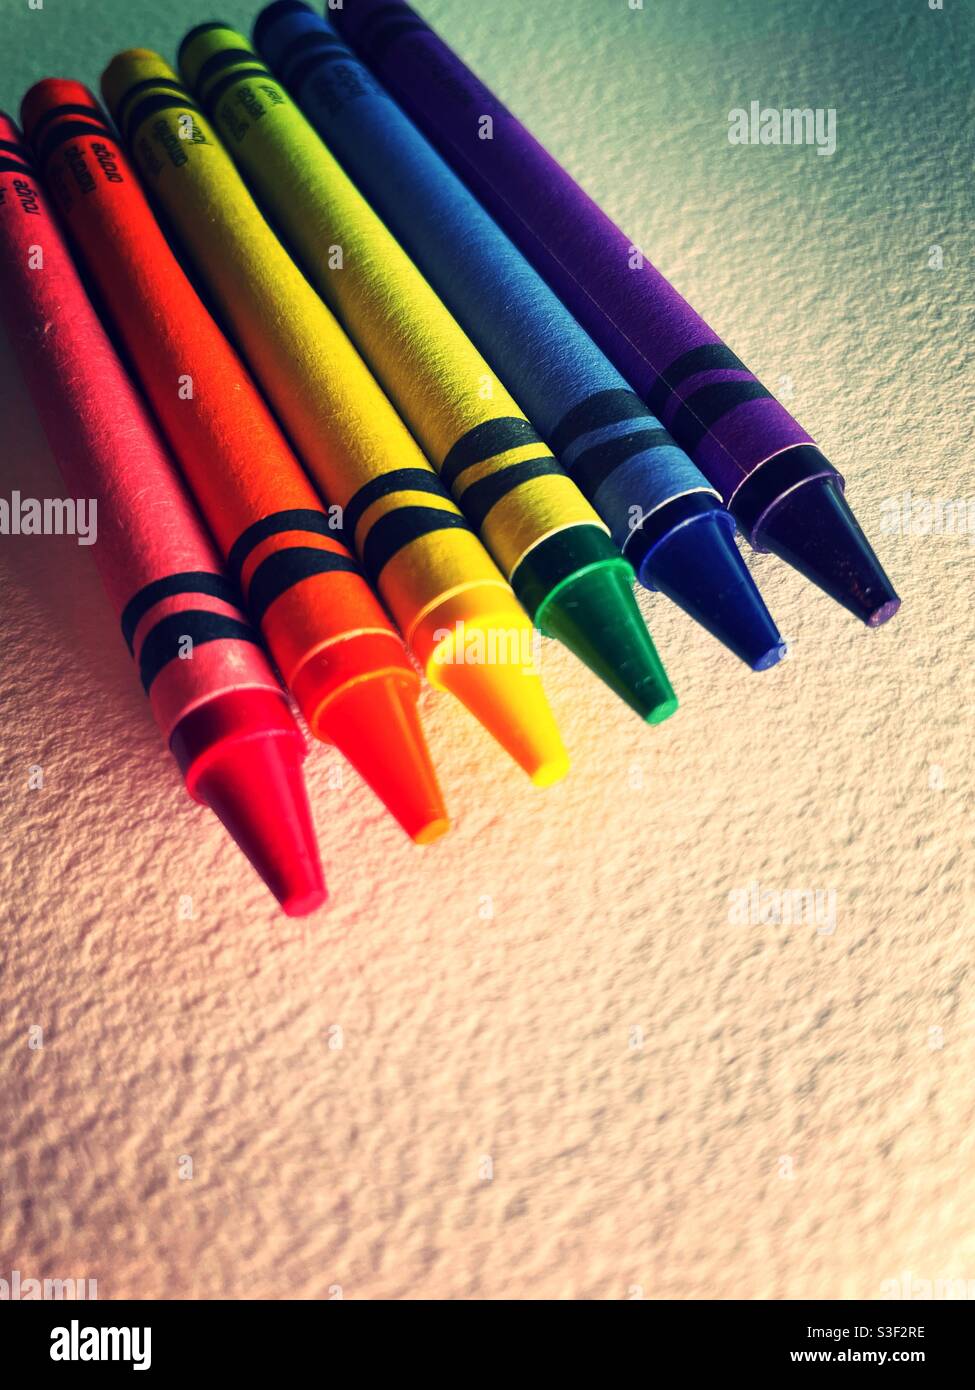 Crayolas hi-res stock photography and images - Alamy, Crayolas